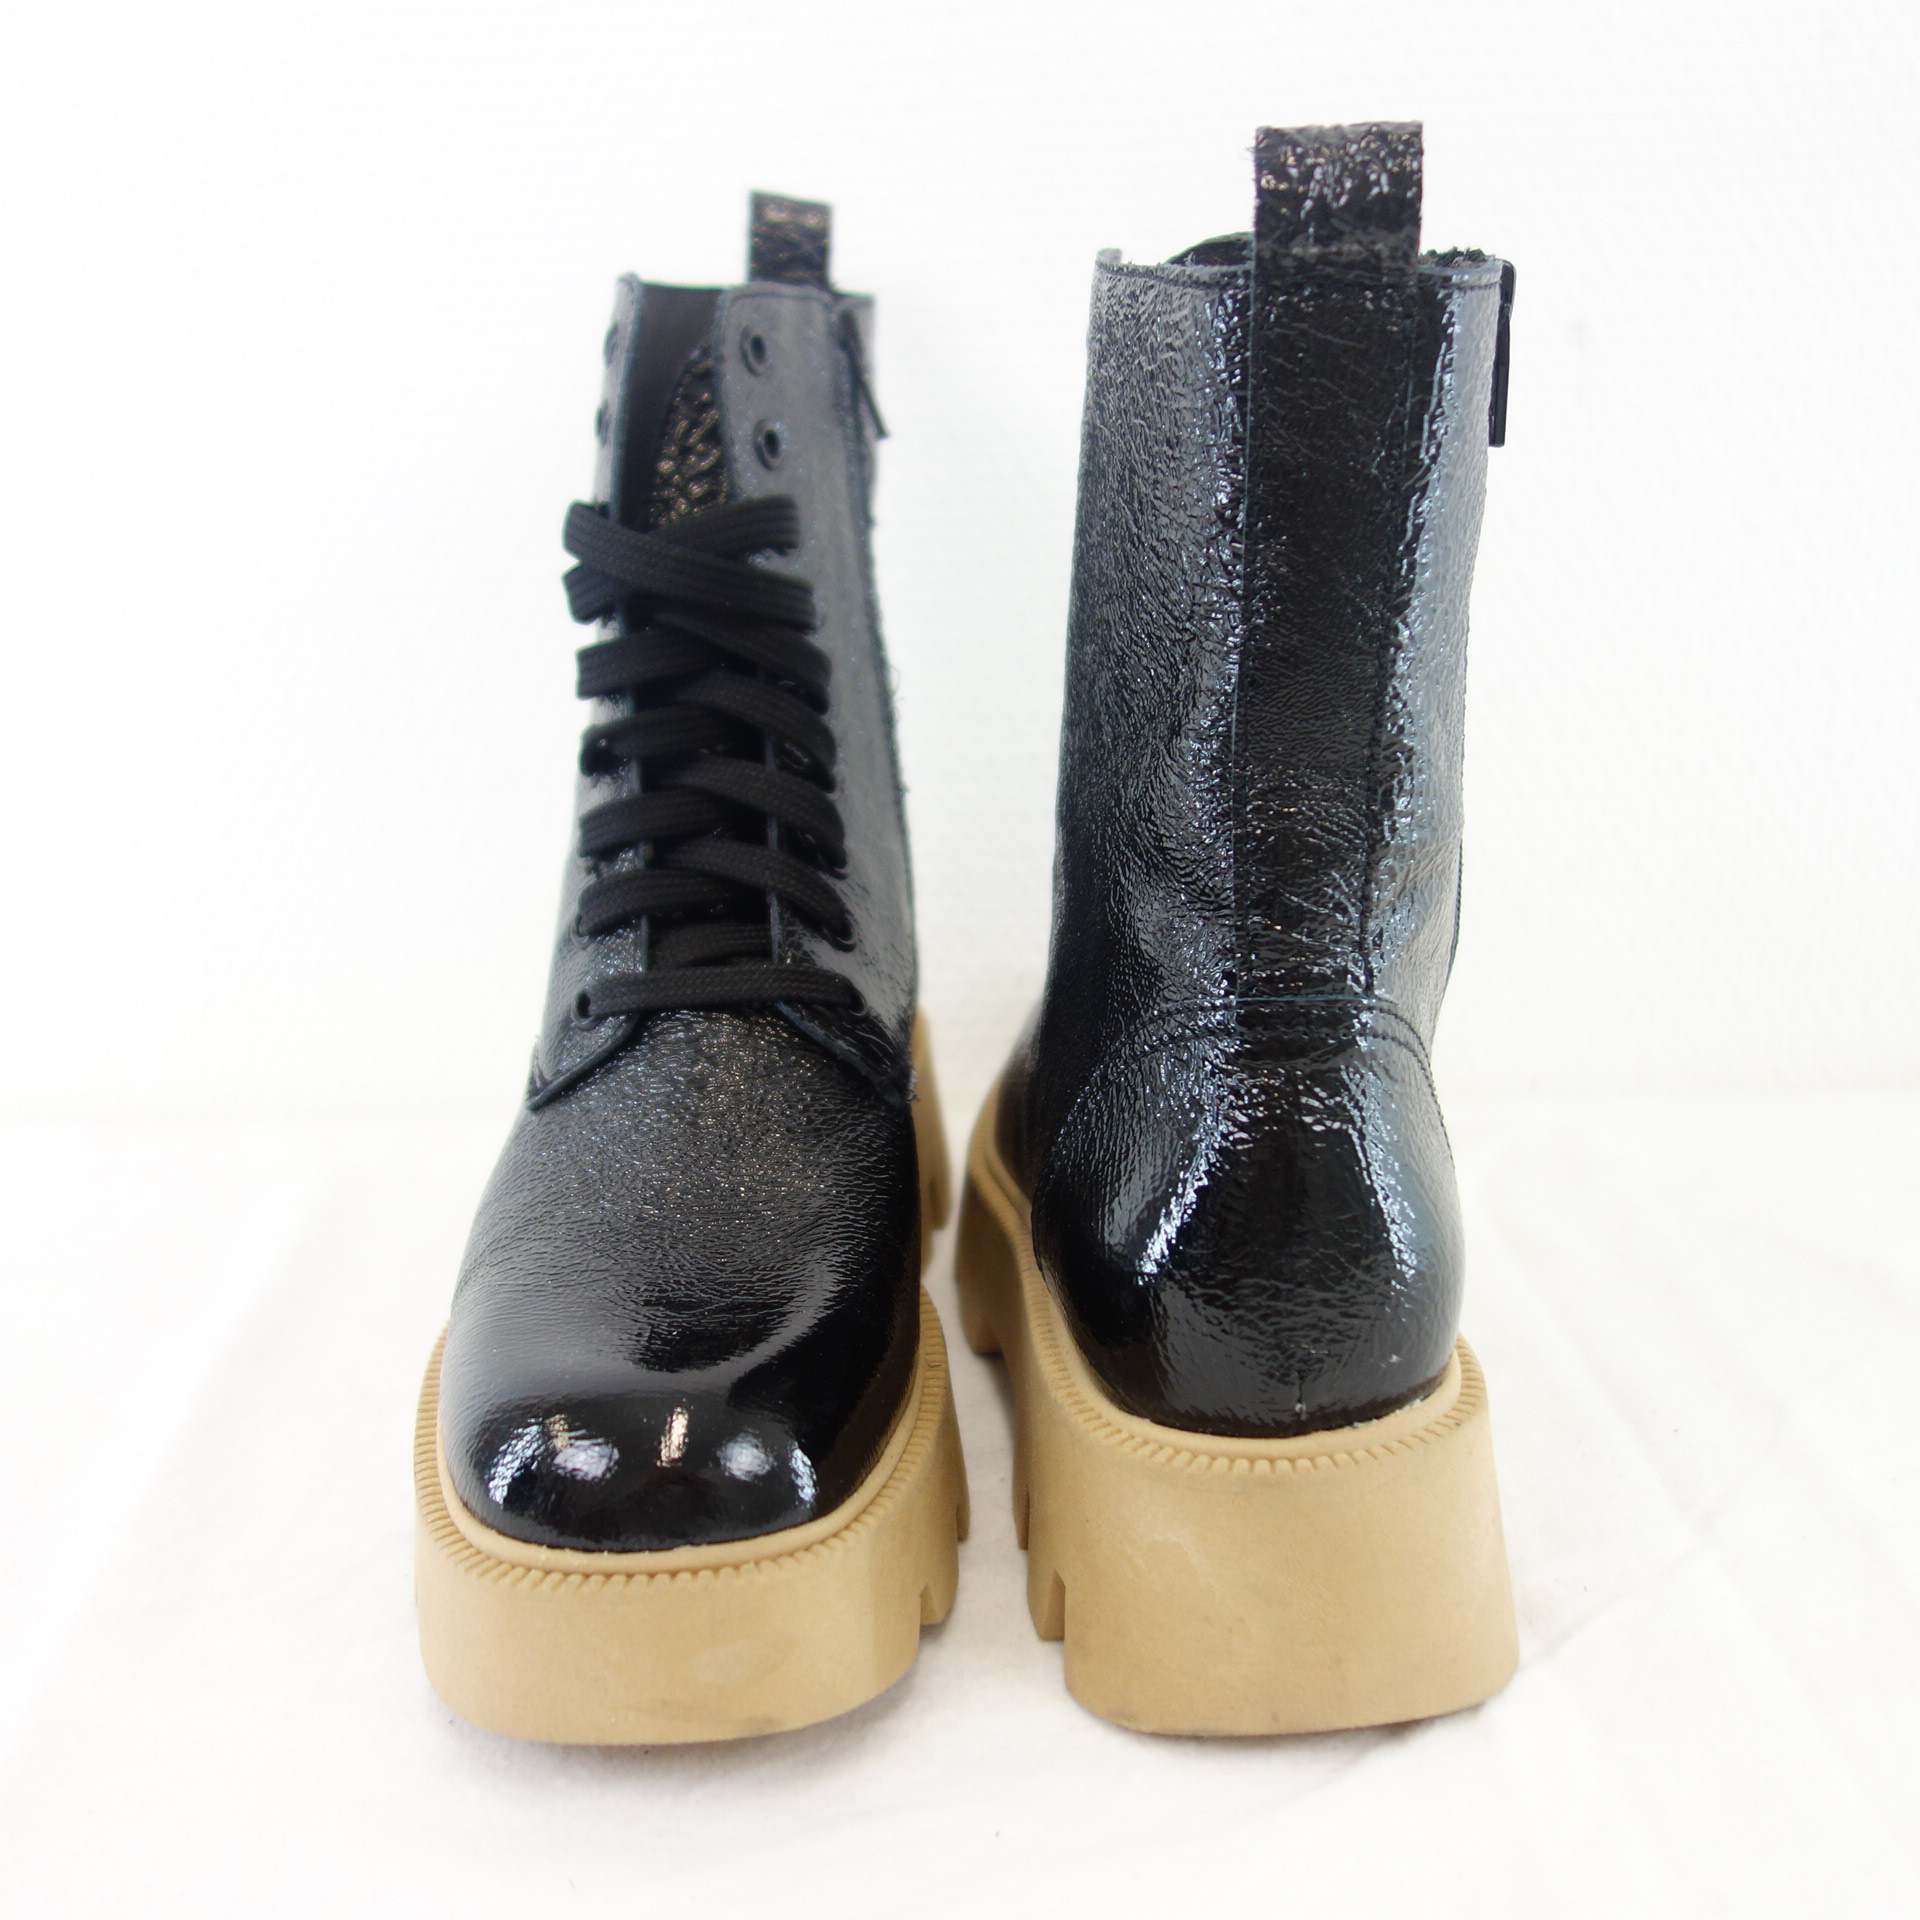 BUKELA Damen Schuhe Stiefeletten Combat Boots Stiefel Leder Schwarz Gr 37